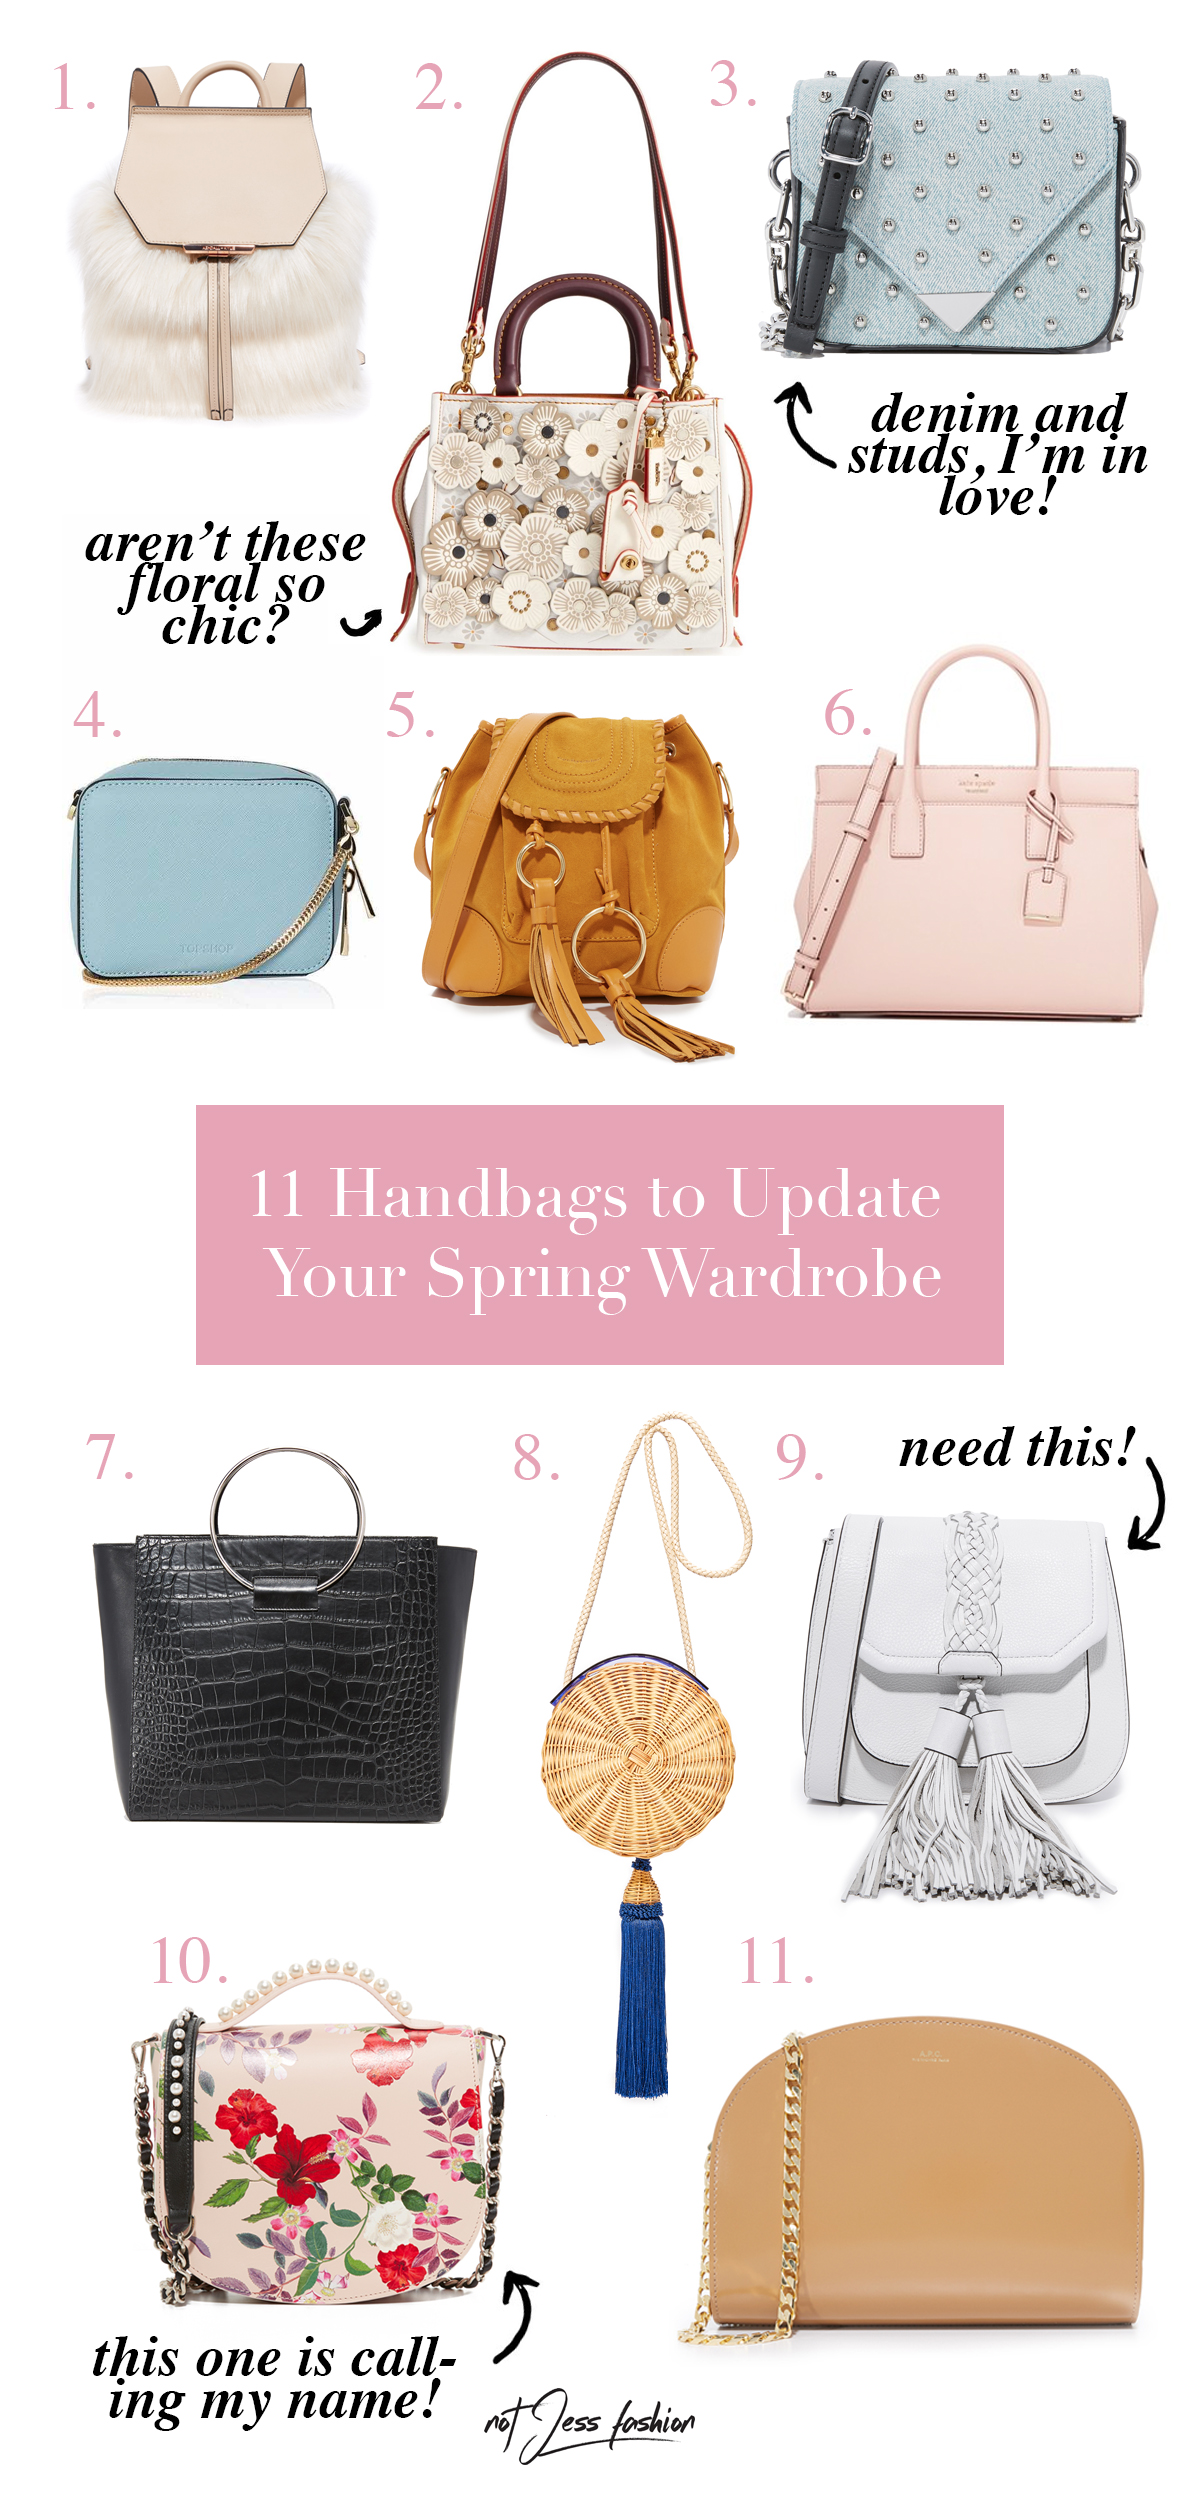 11 Spring Handbags to Update Your Wardrobe // NotJessFashion.com